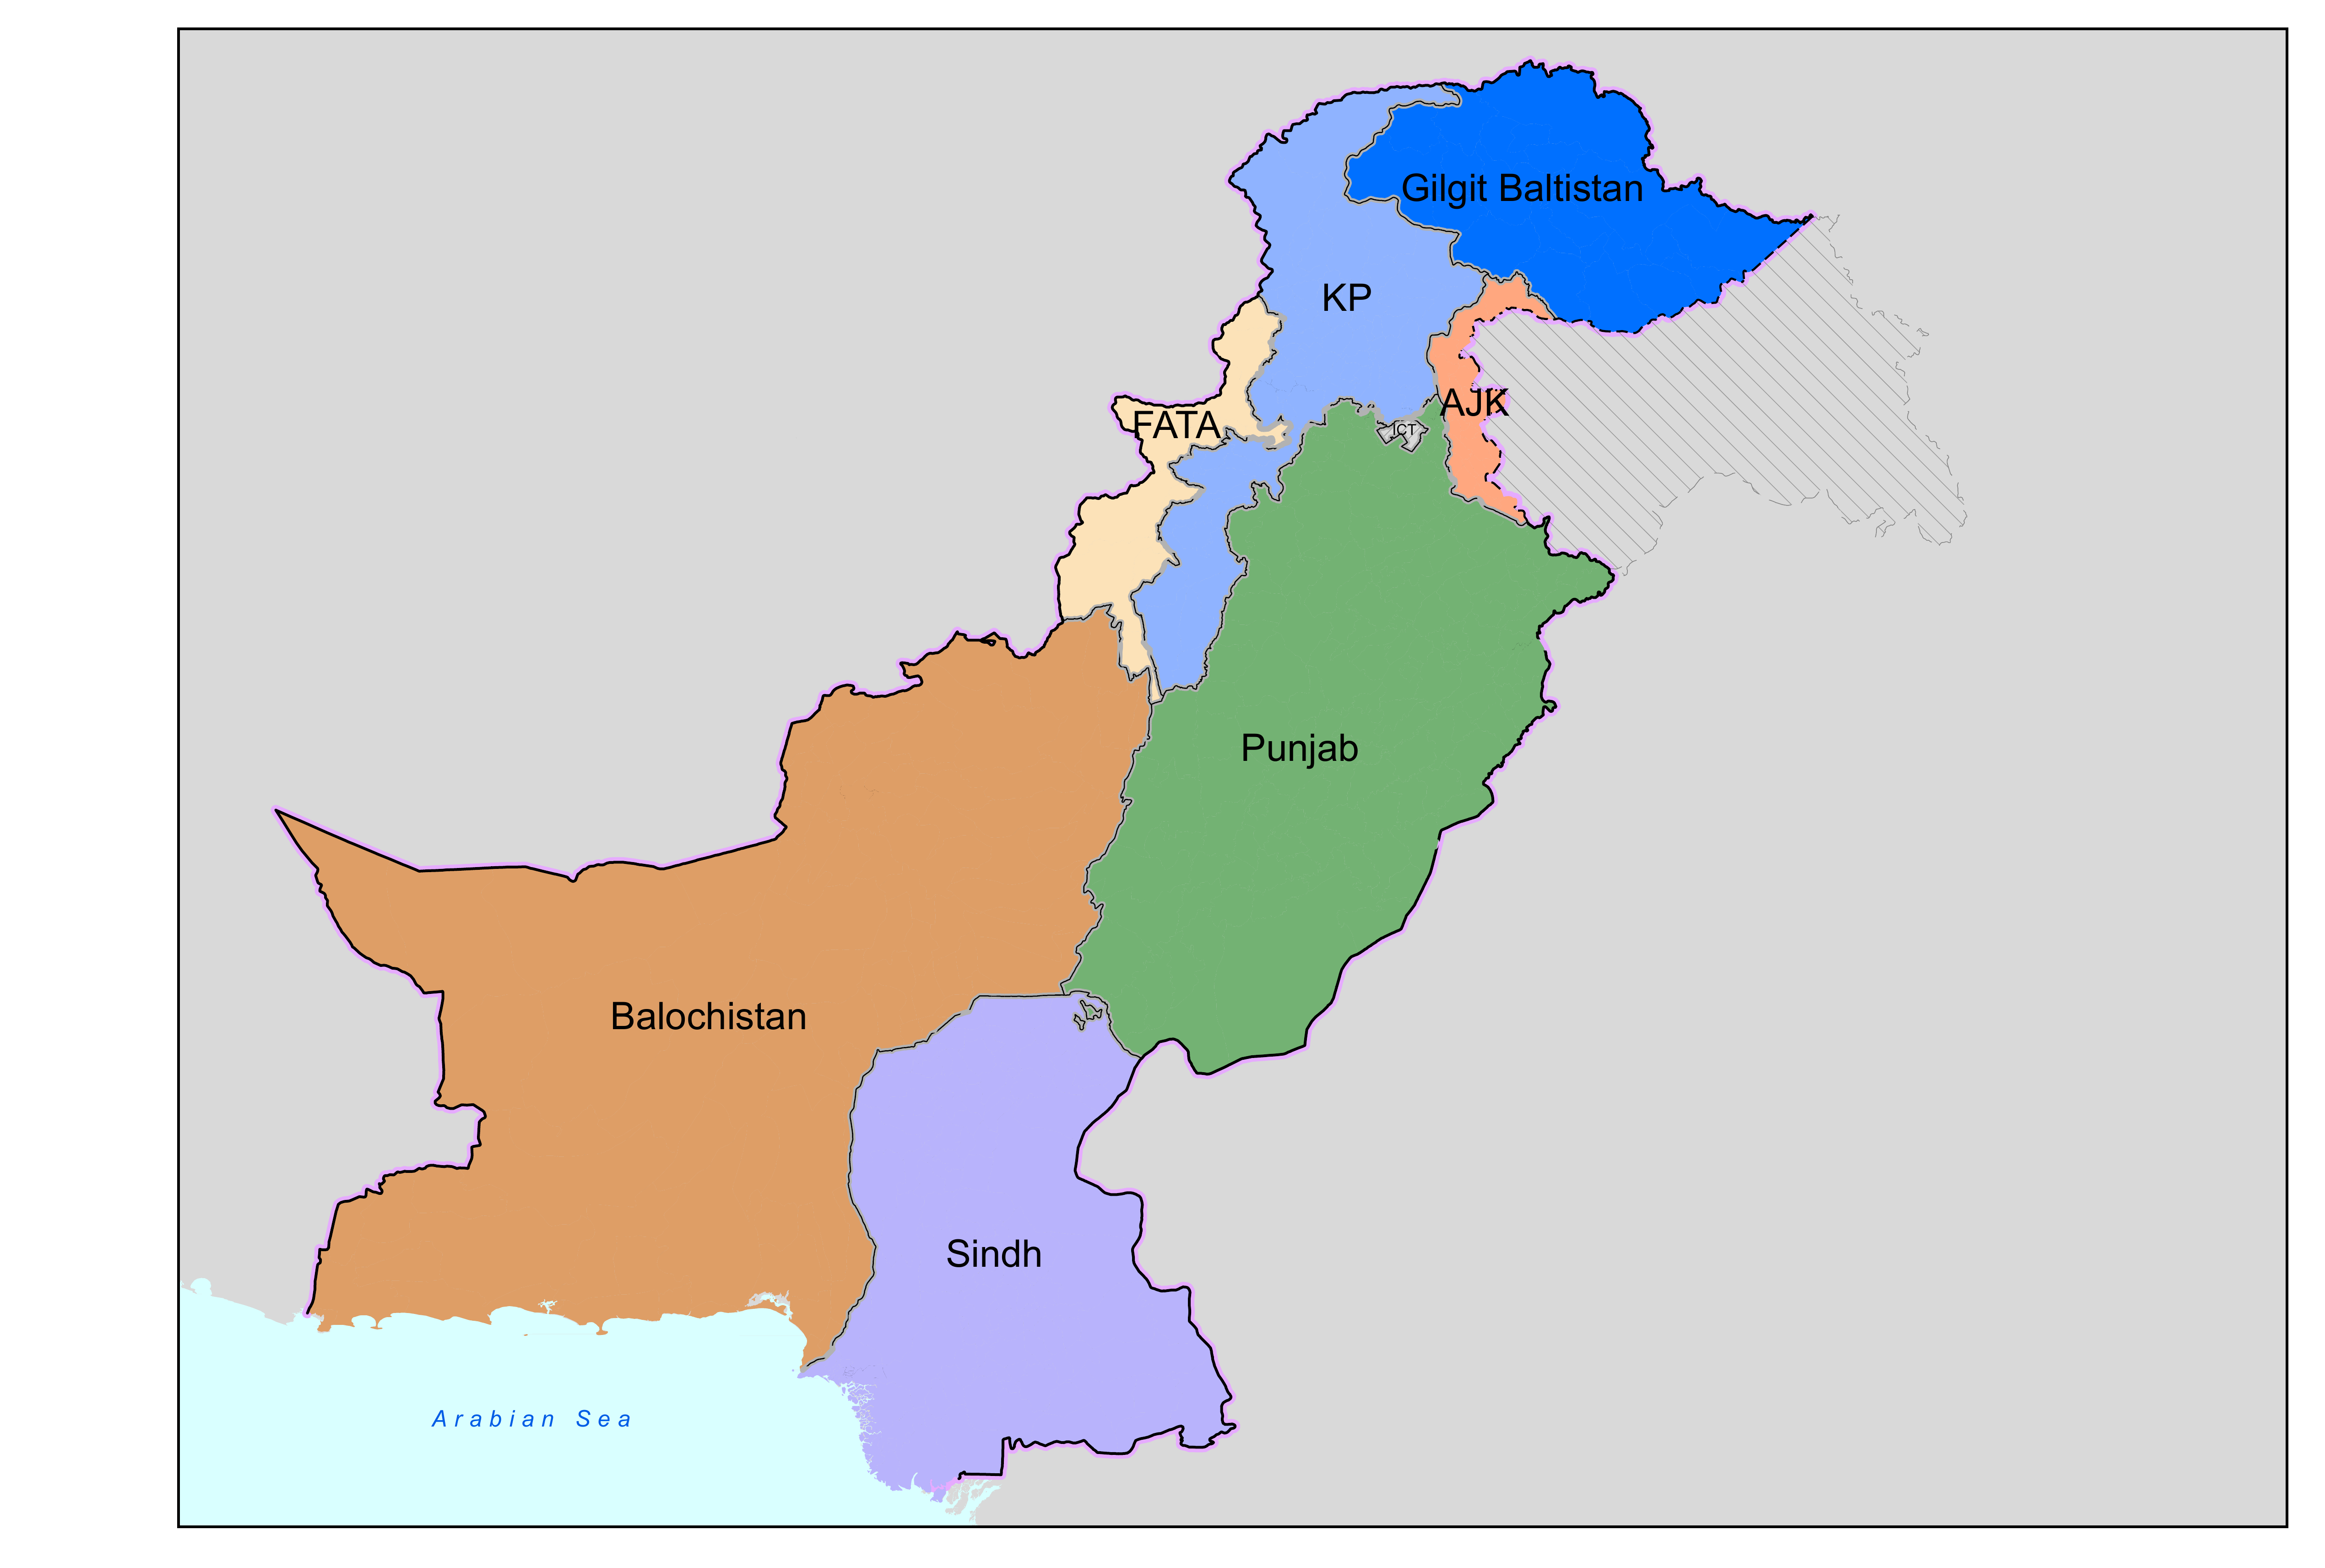 Map of Pakistan showing different Provinces/Regions